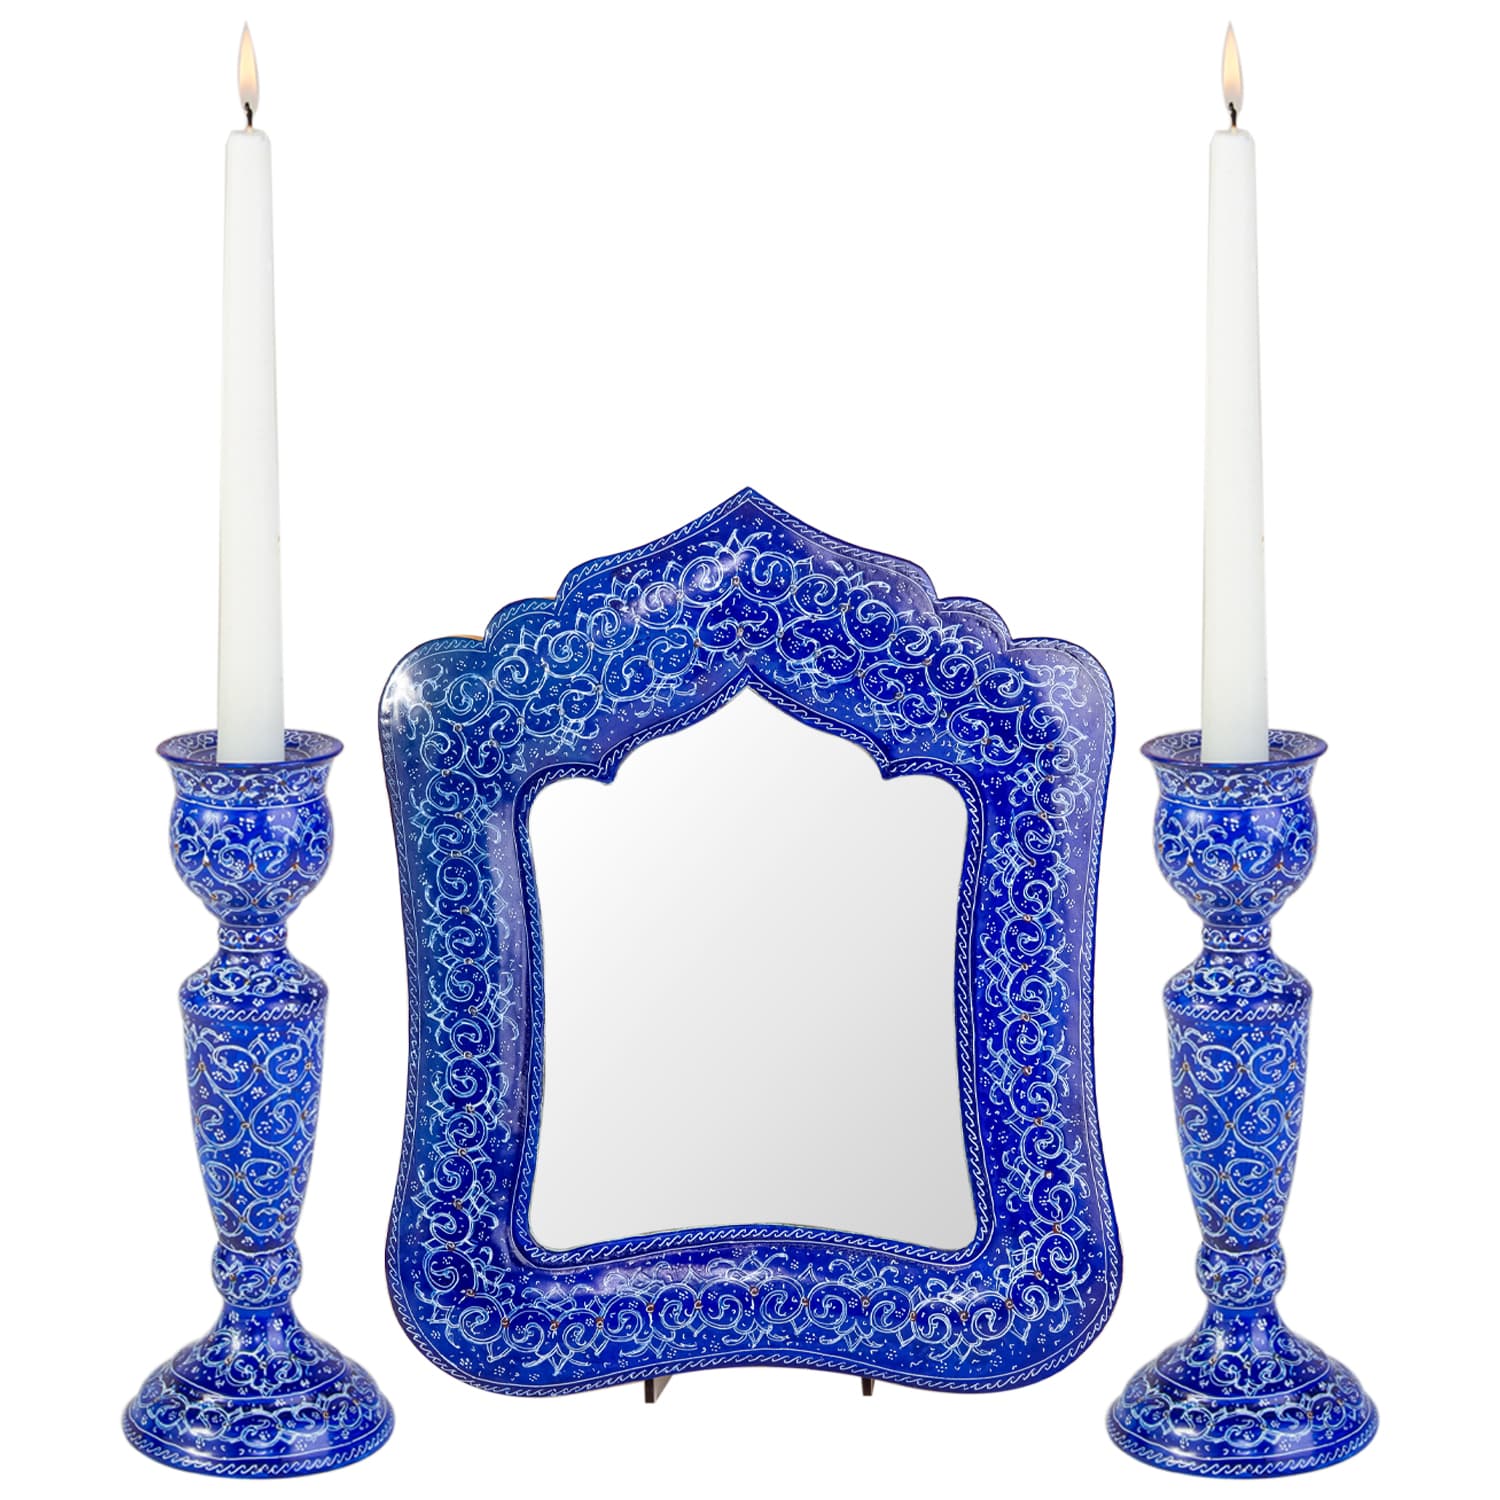 minakari persian mirror and candle holder set 65b04c0f80d51